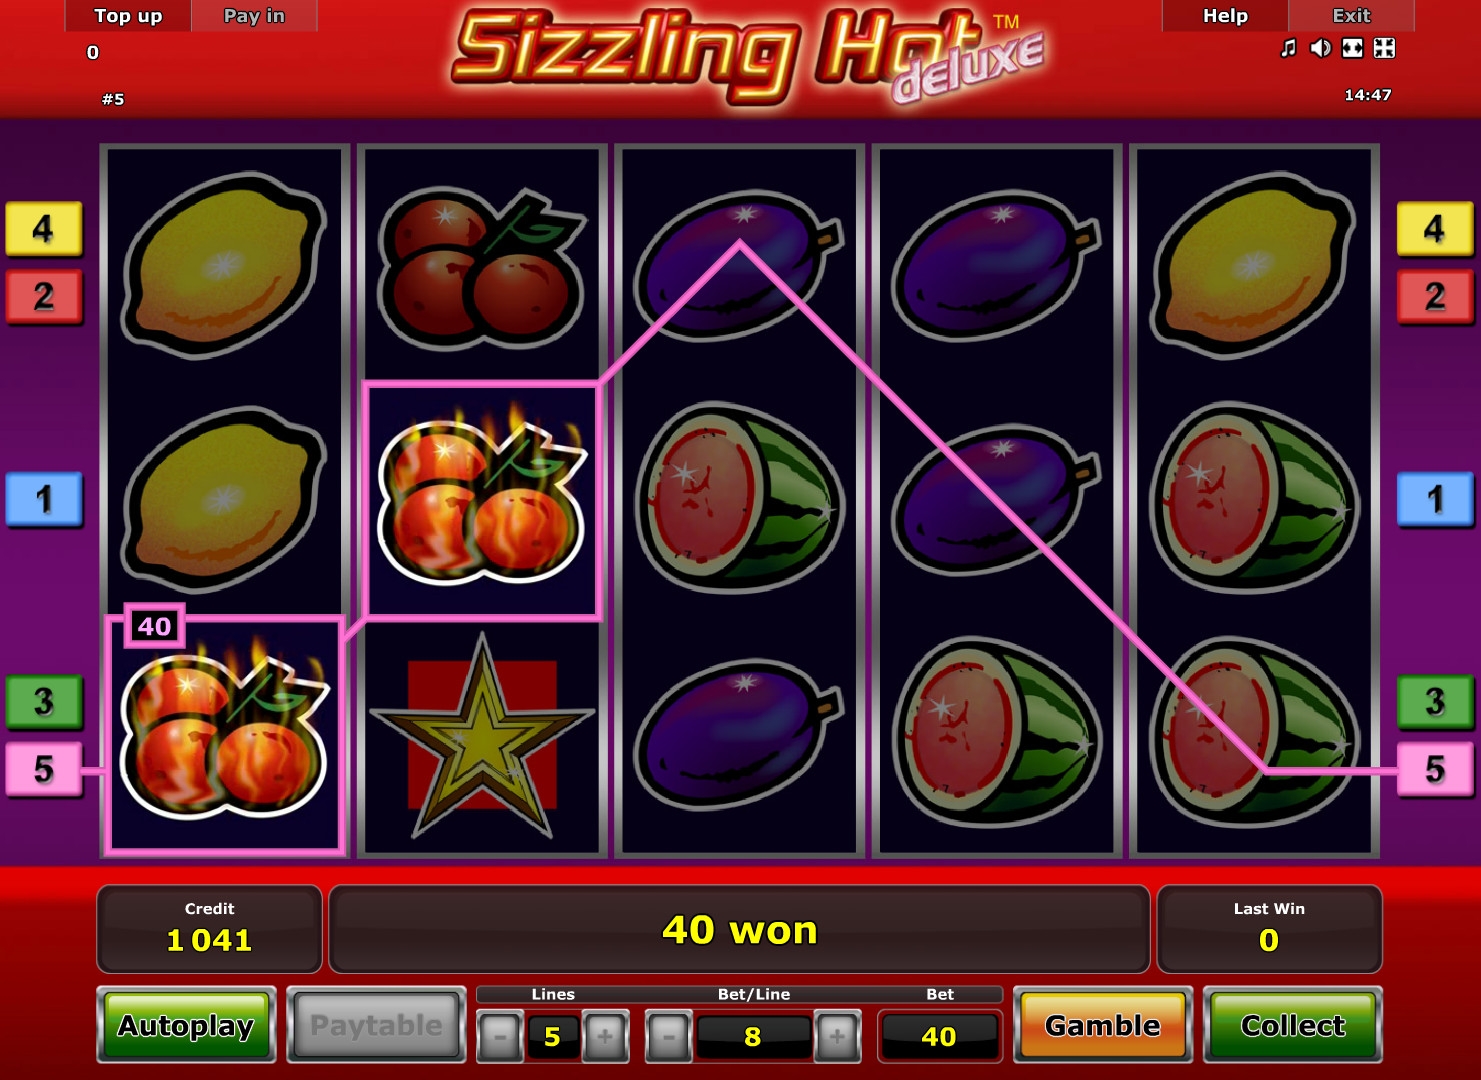  guns n roses casino game Highroller Sizzling Hot deluxe Free Online Slots 